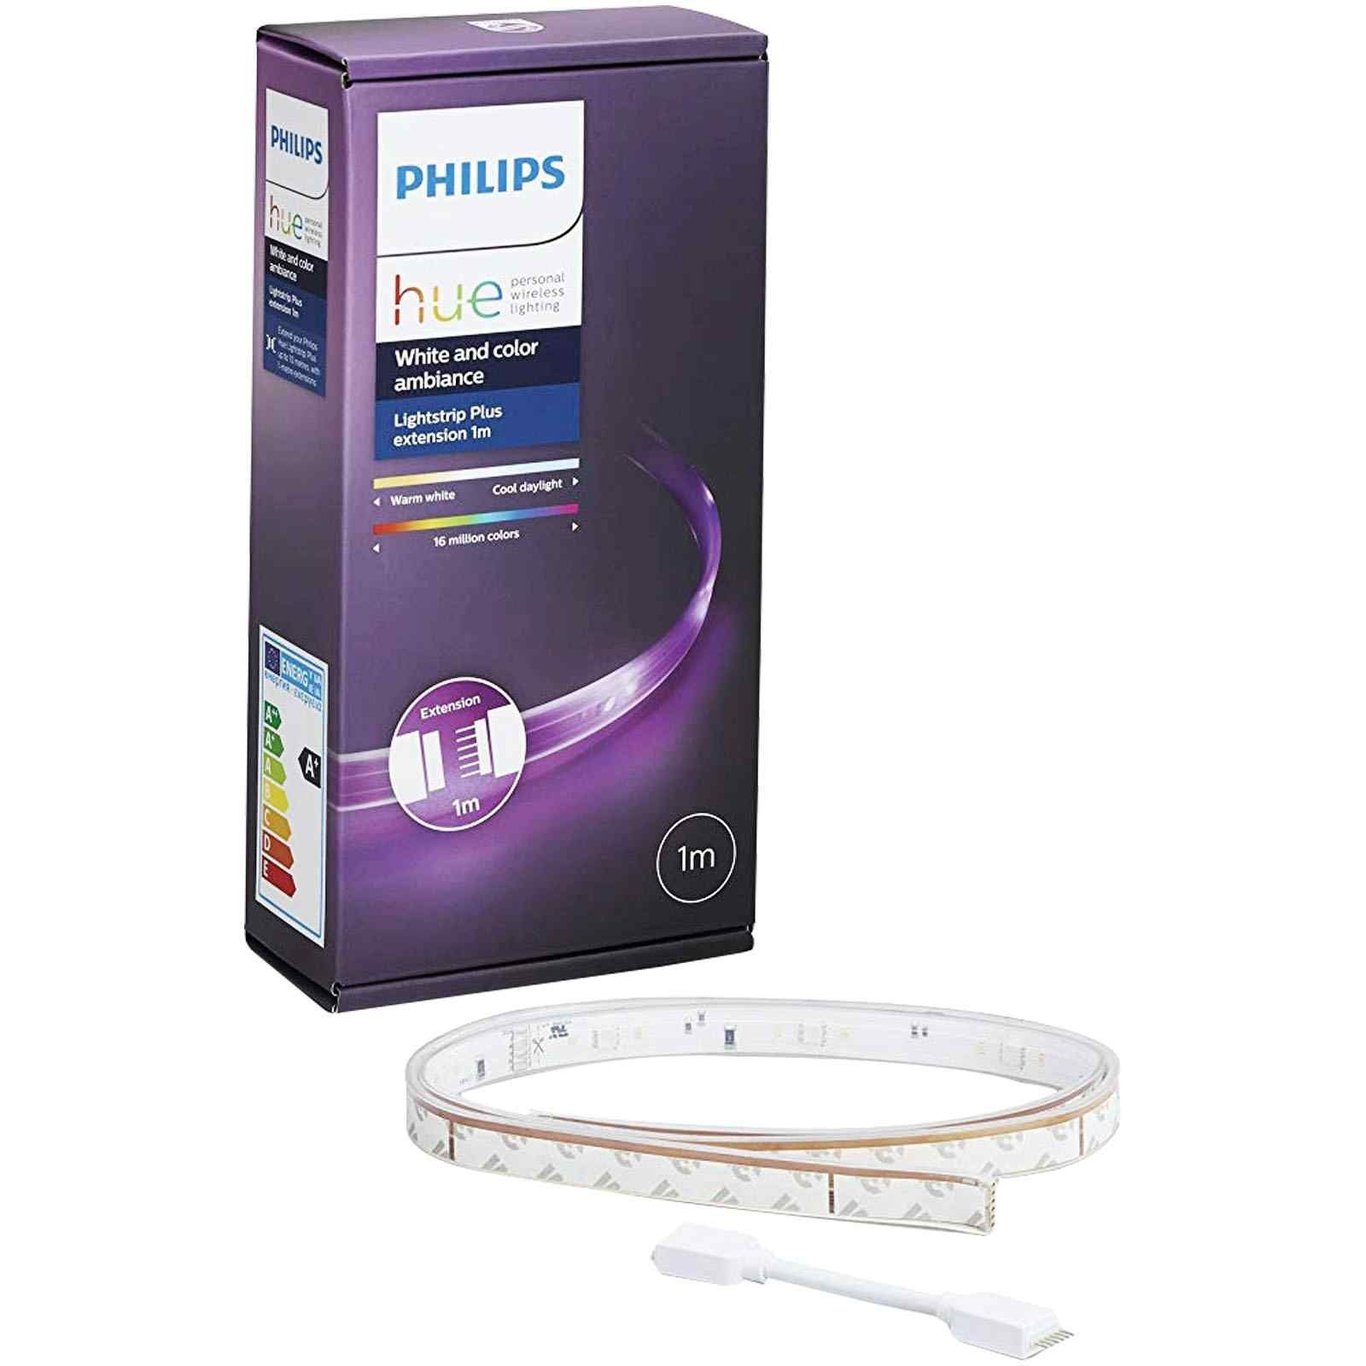 Philips Hue White 及 Color Ambiance LightStrip Plus APR 延伸版 1米